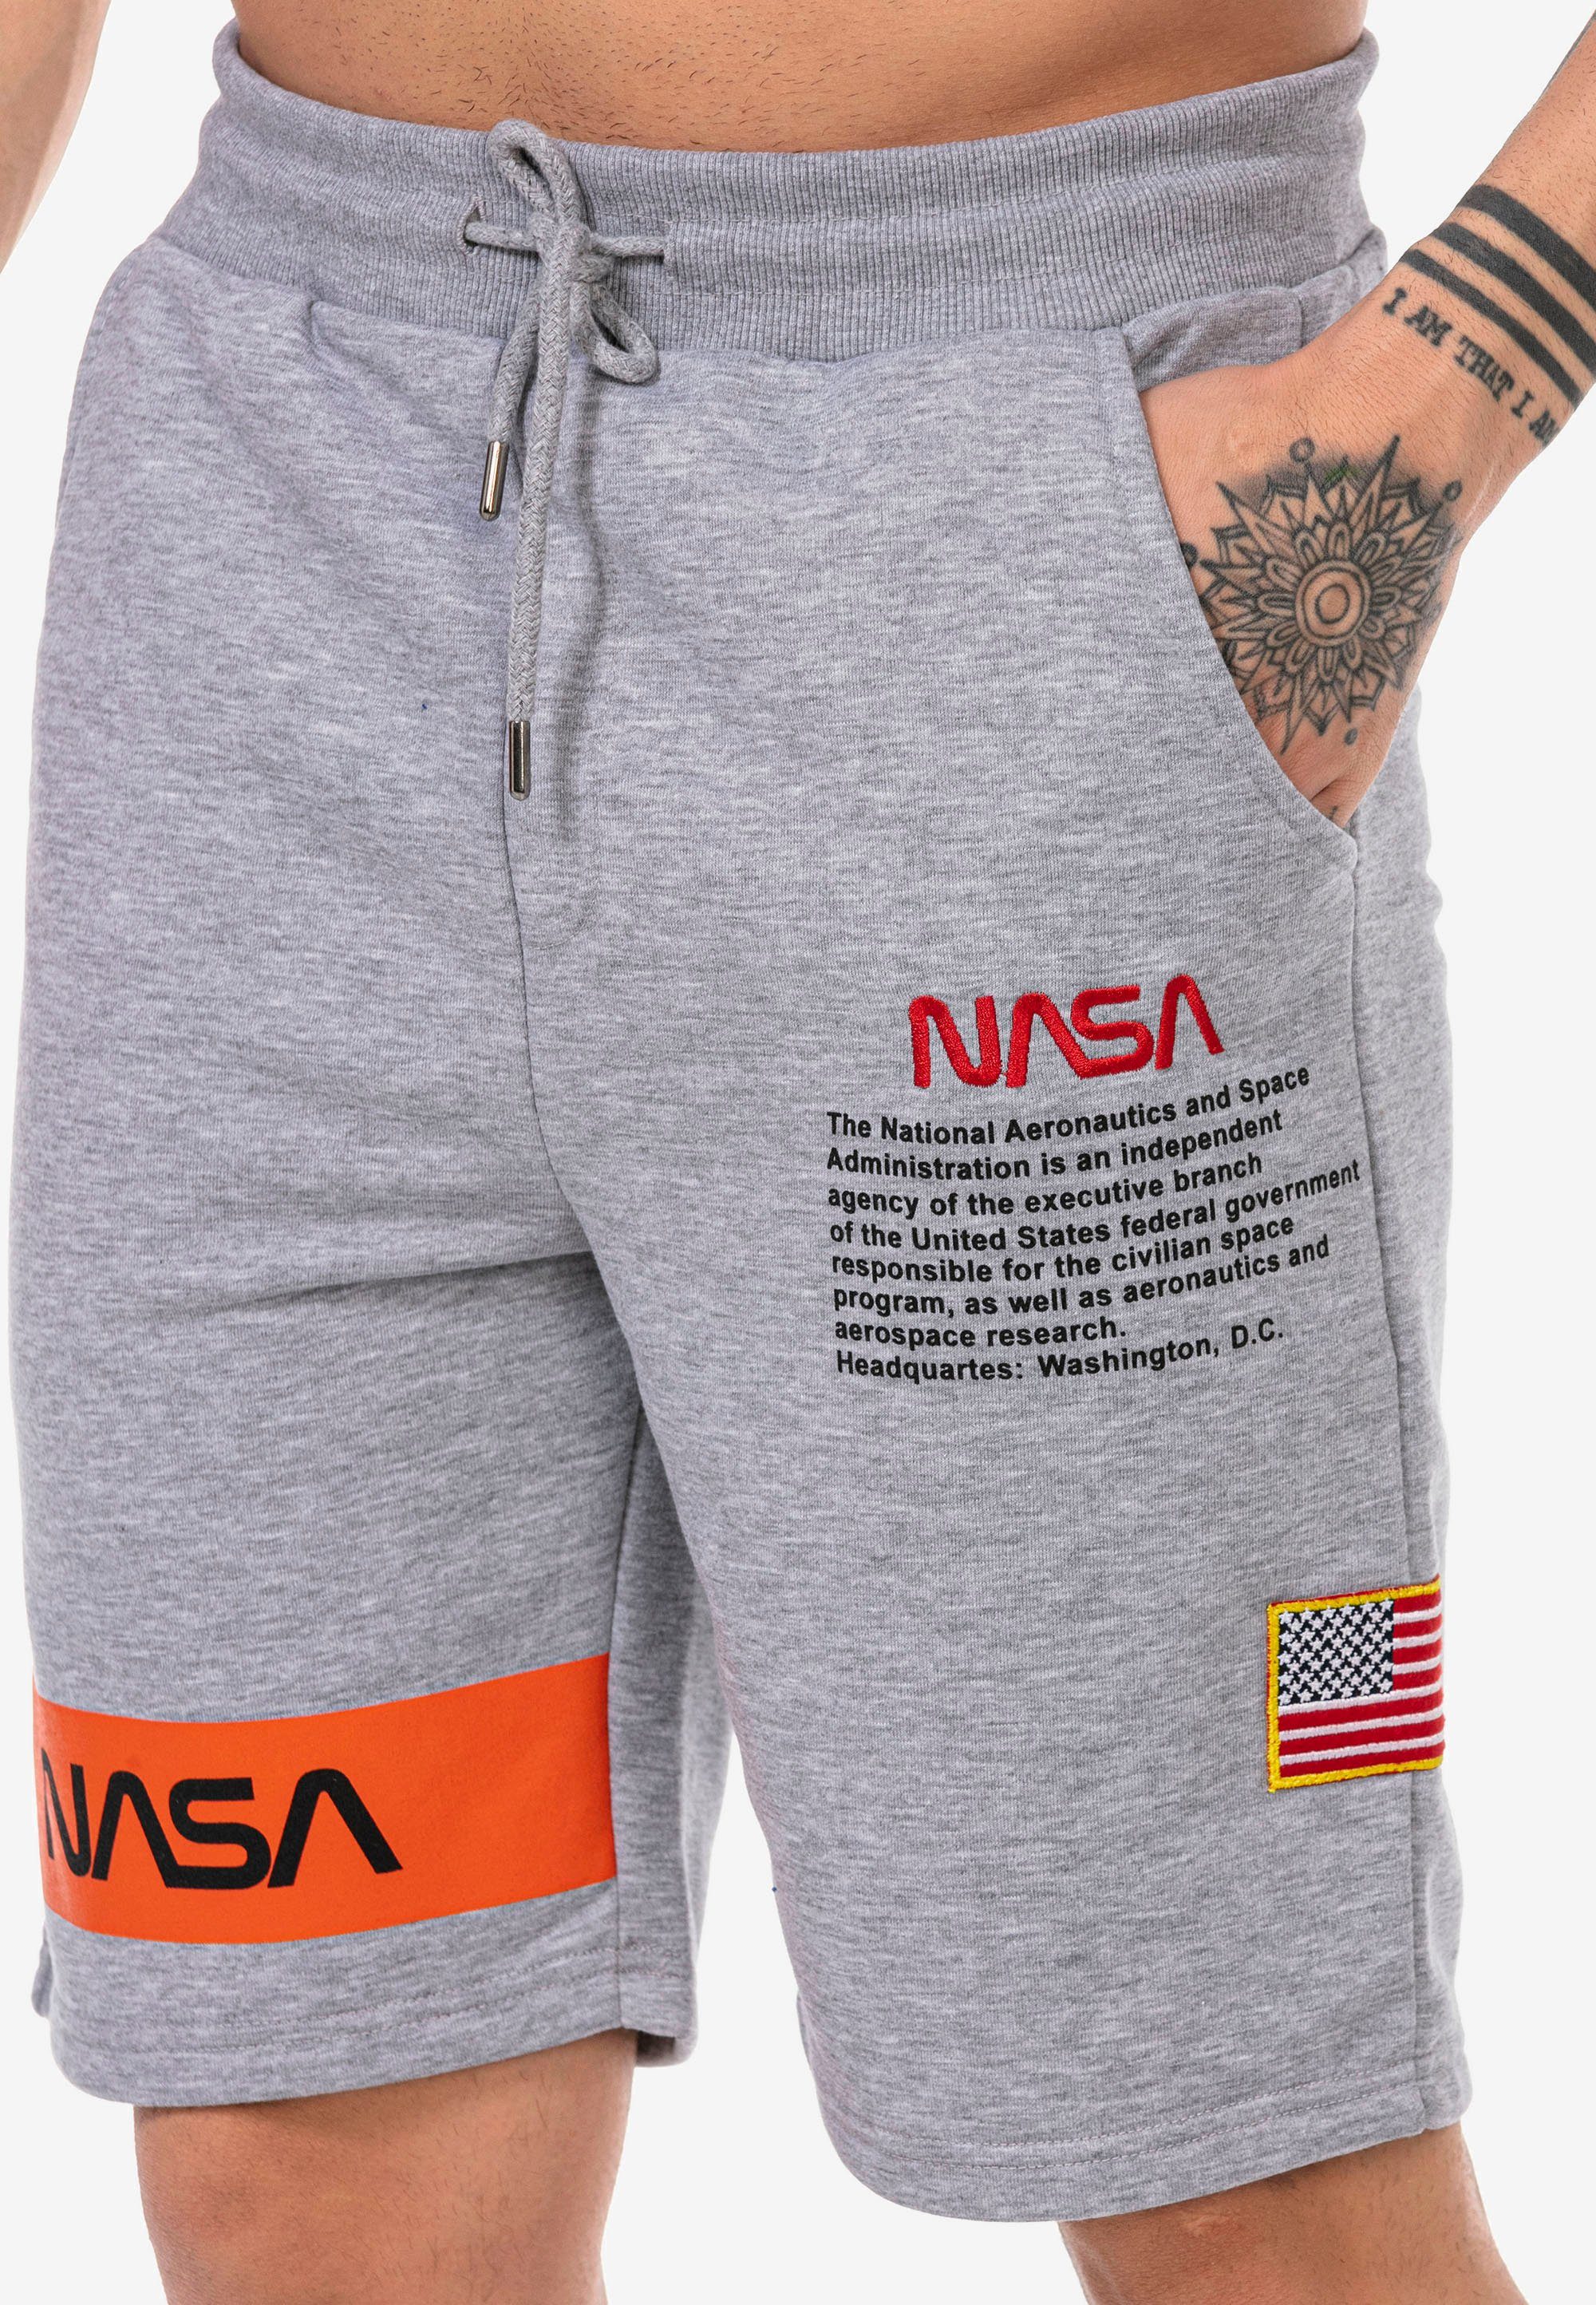 gesticktem RedBridge grau-weiß mit Shorts Plano NASA-Motiv